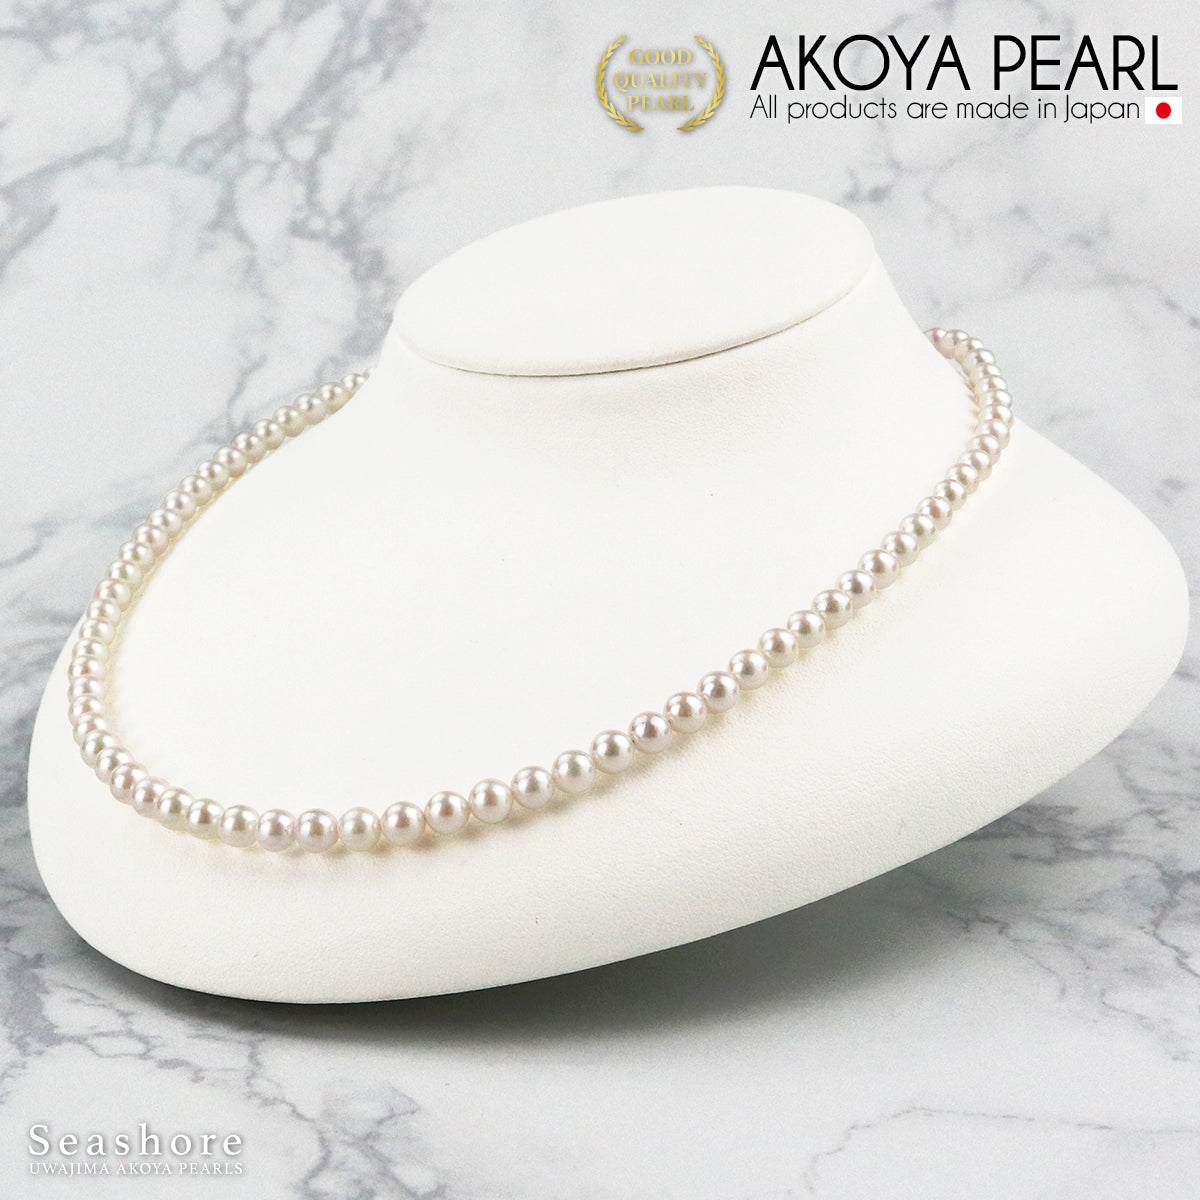 Akoya 珍珠项链 1 条 [5.0-5.5 毫米] SV925 含调节器、含真品证书、含纸板盒 (4030)